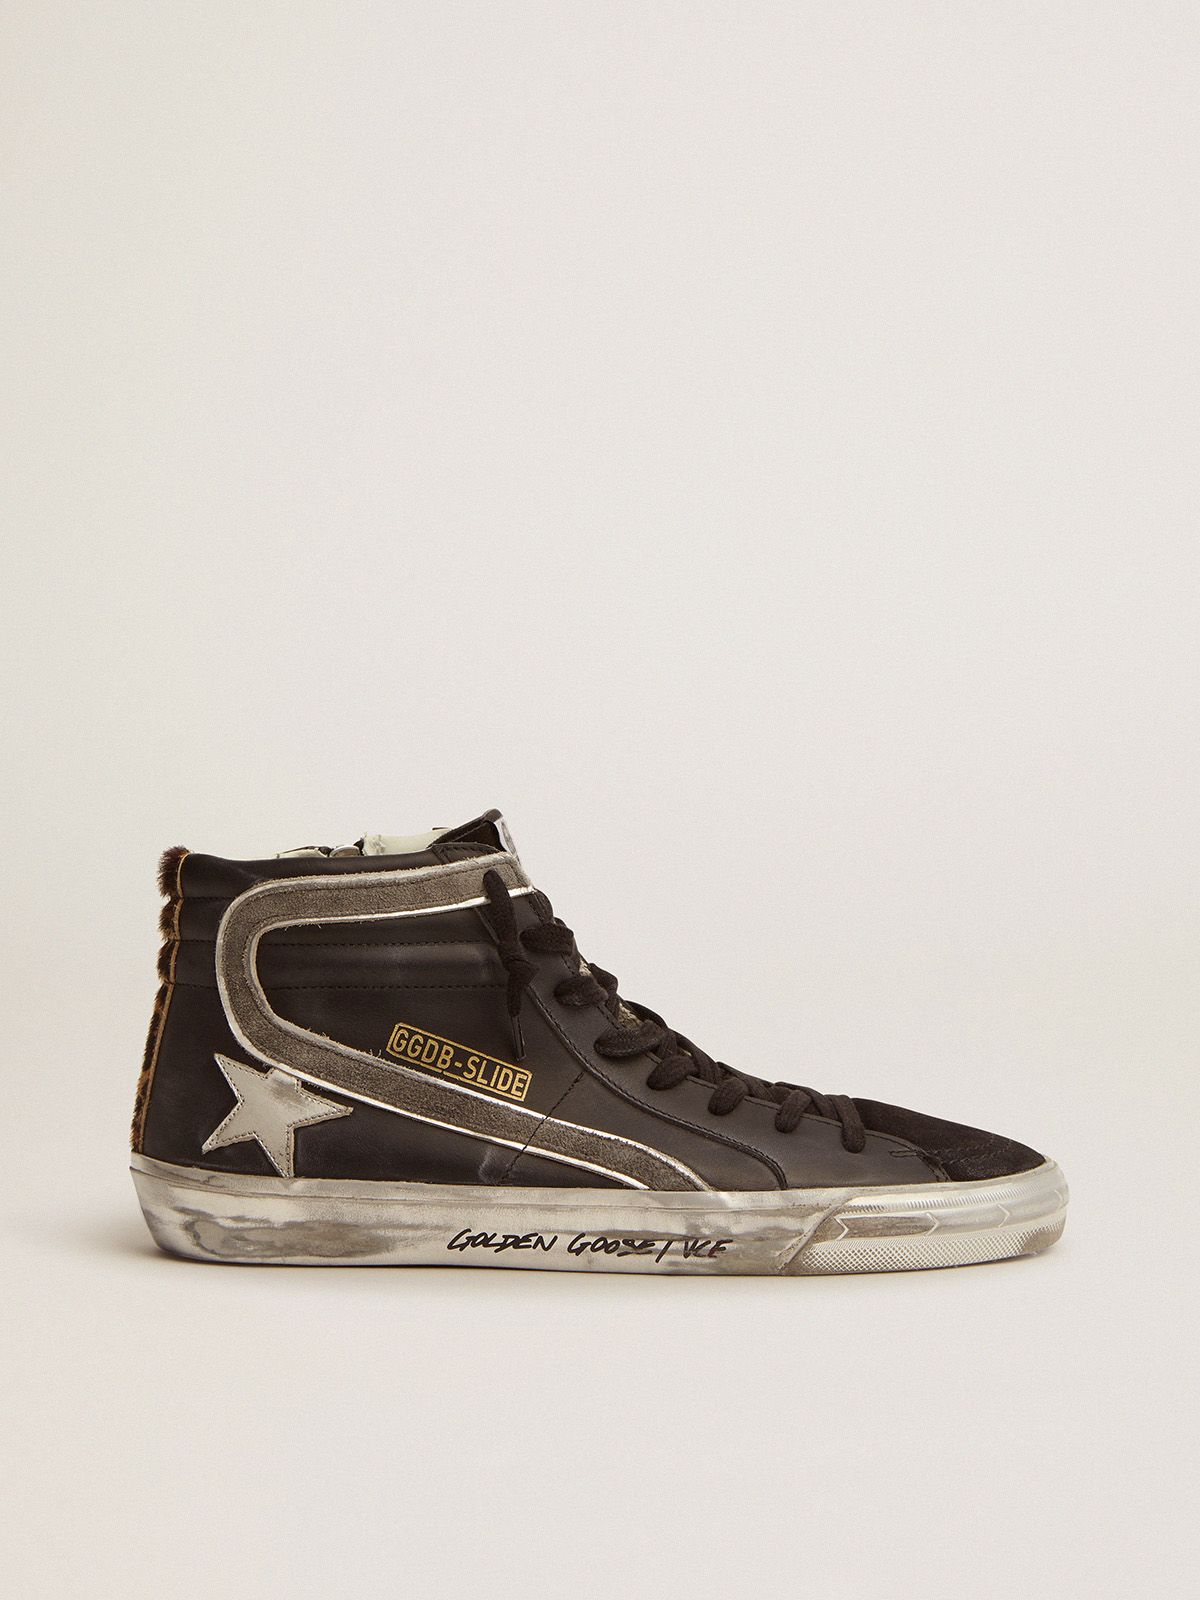 Slide sneakers in black leather with leopard-print pony skin heel tab